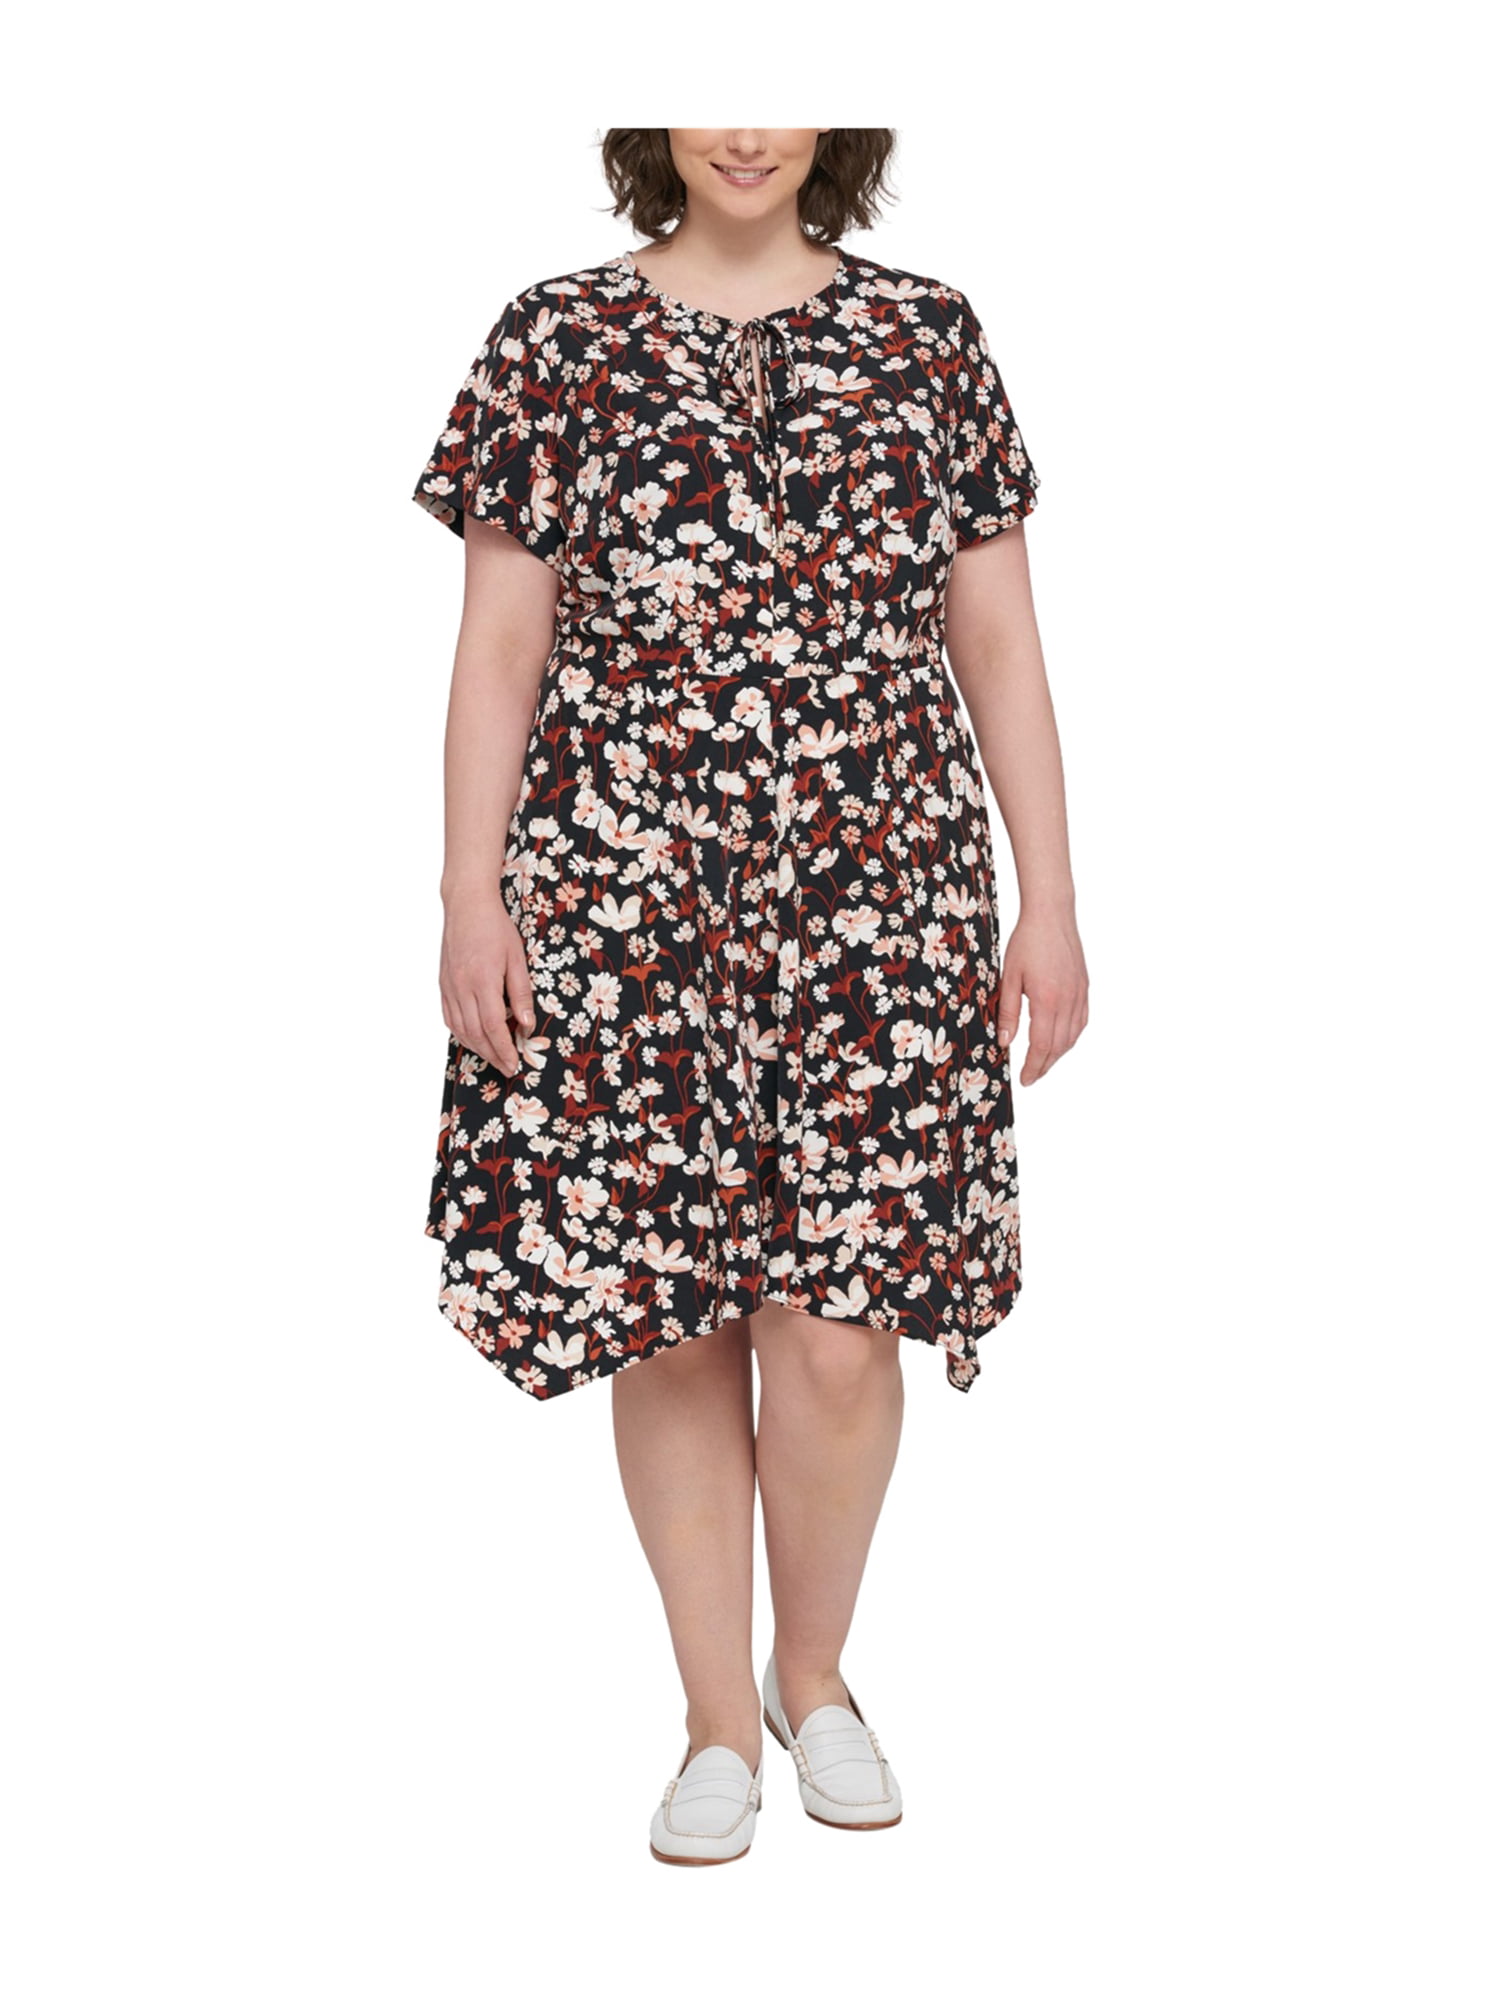 Tommy Hilfiger Womens Floral Peasant Dress bml 14W - Plus Size ...